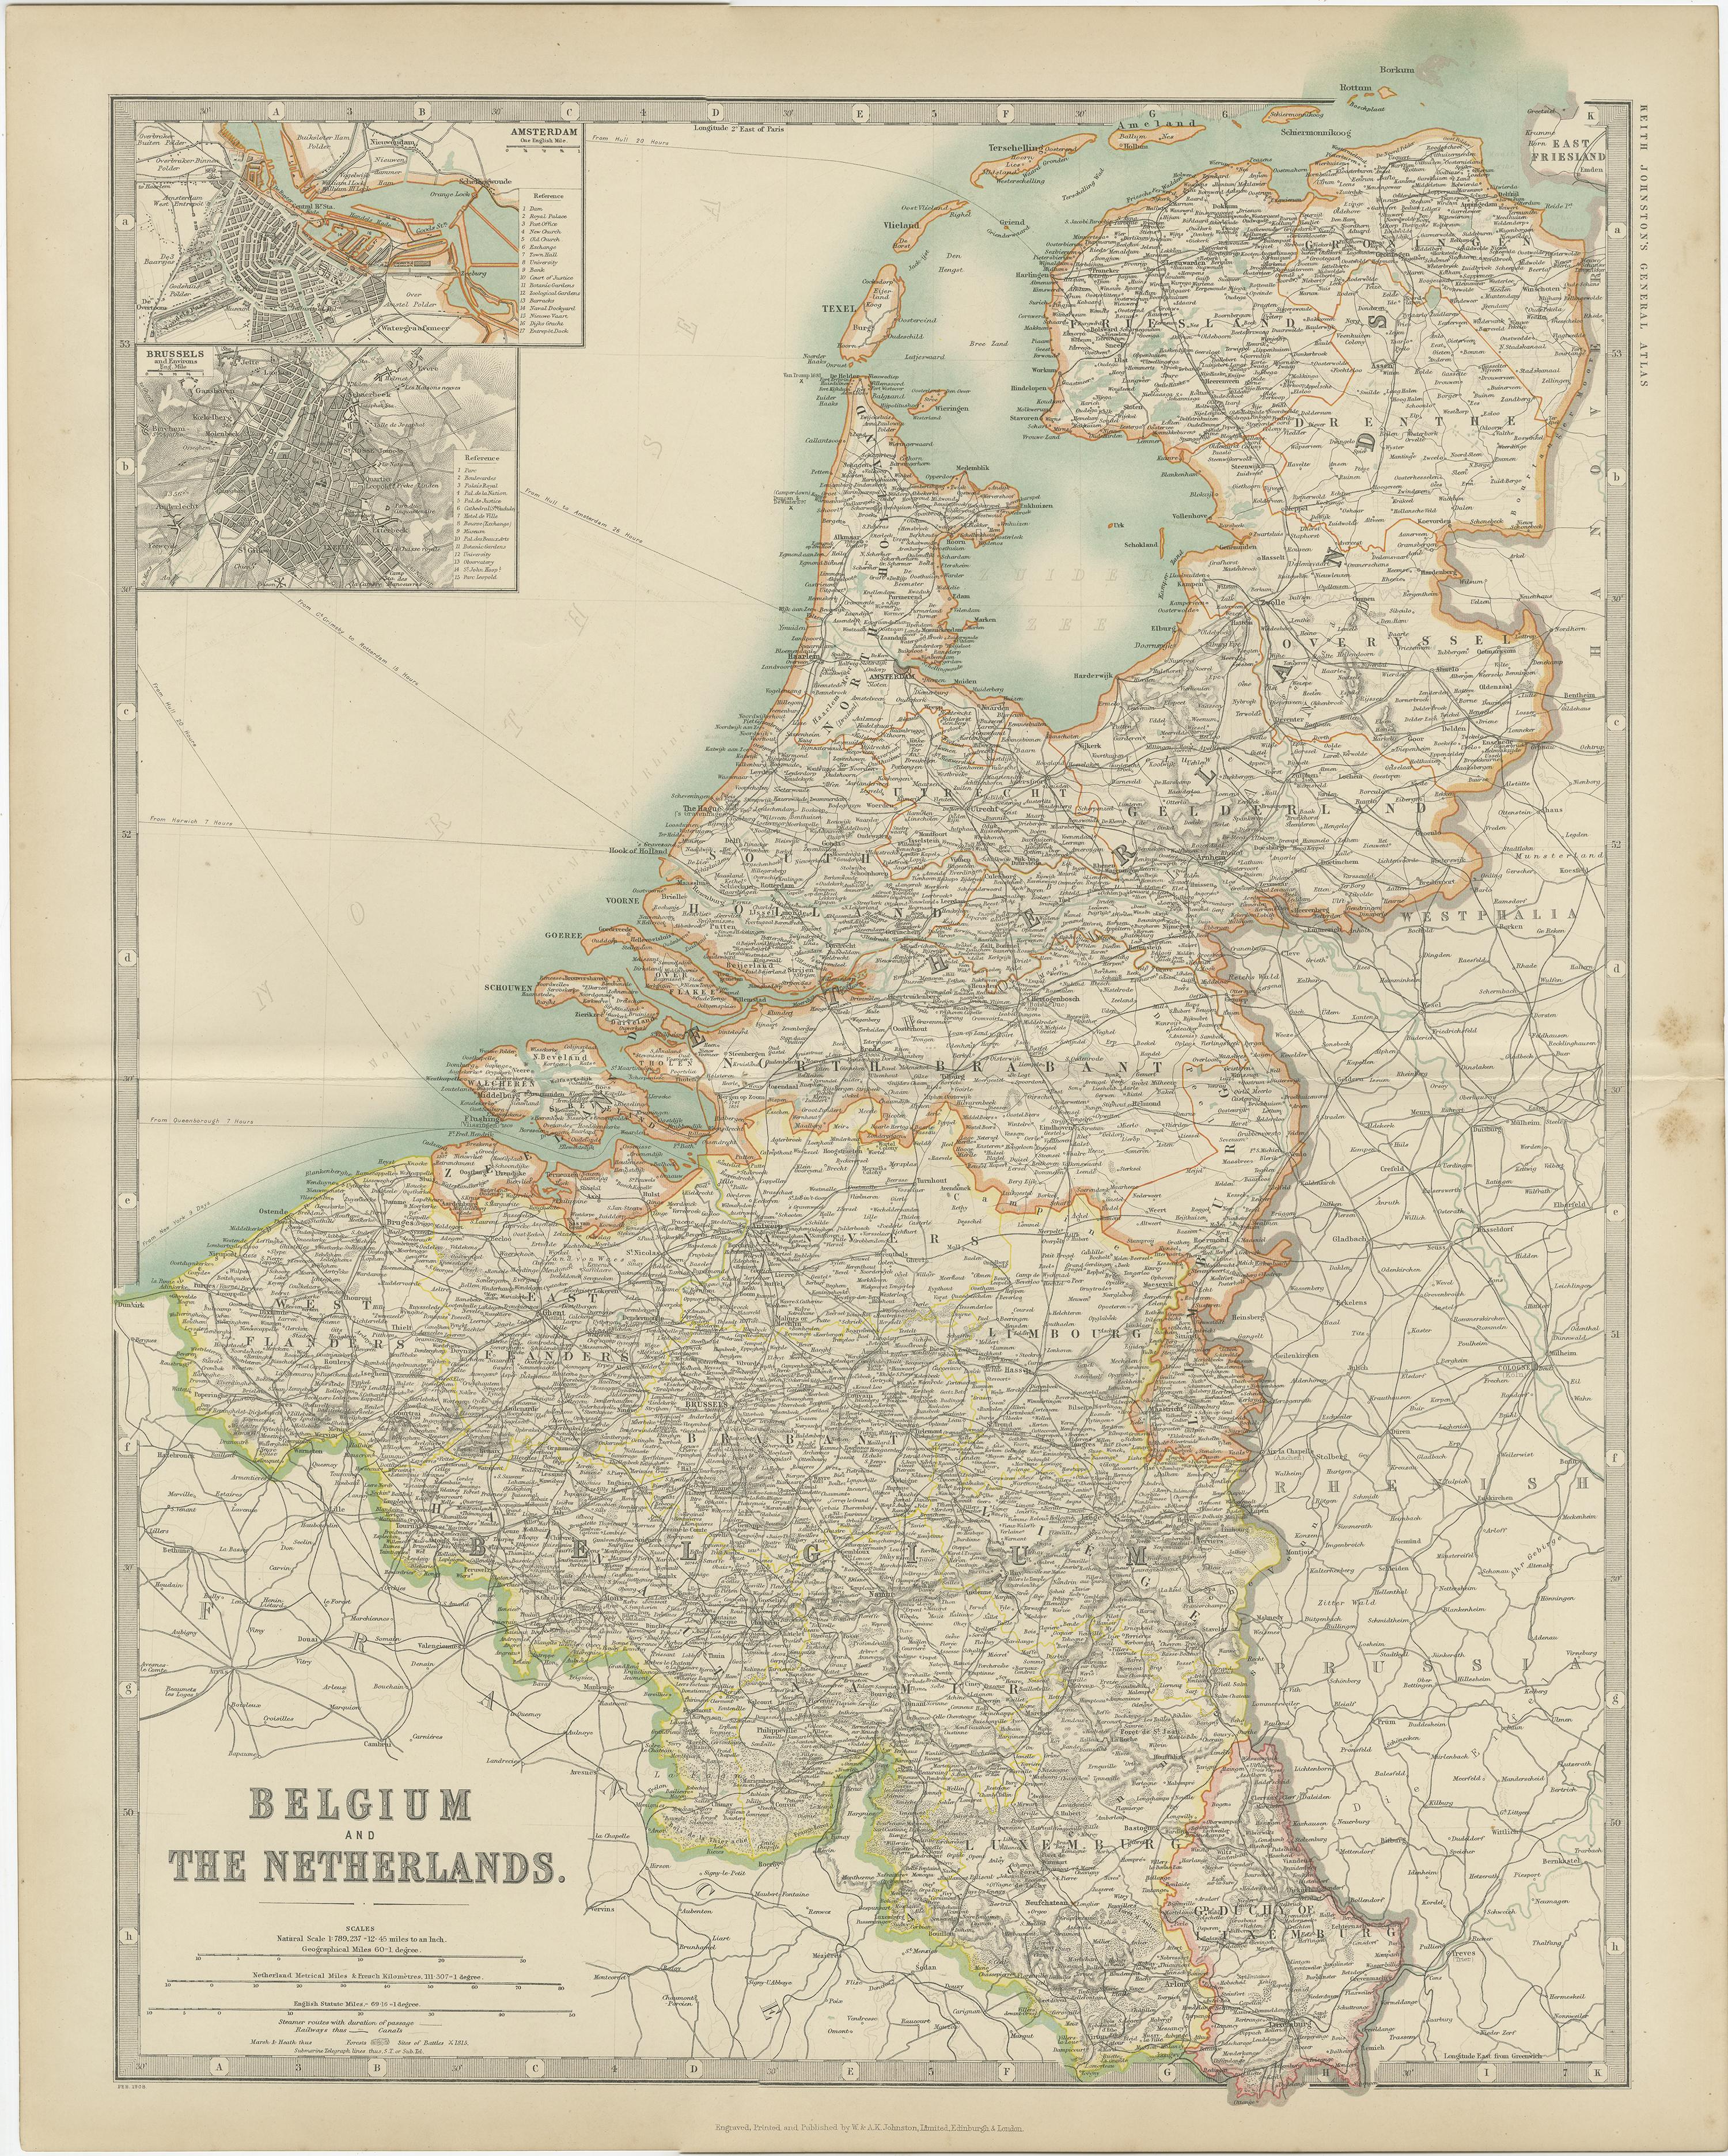 amsterdam and belgium map